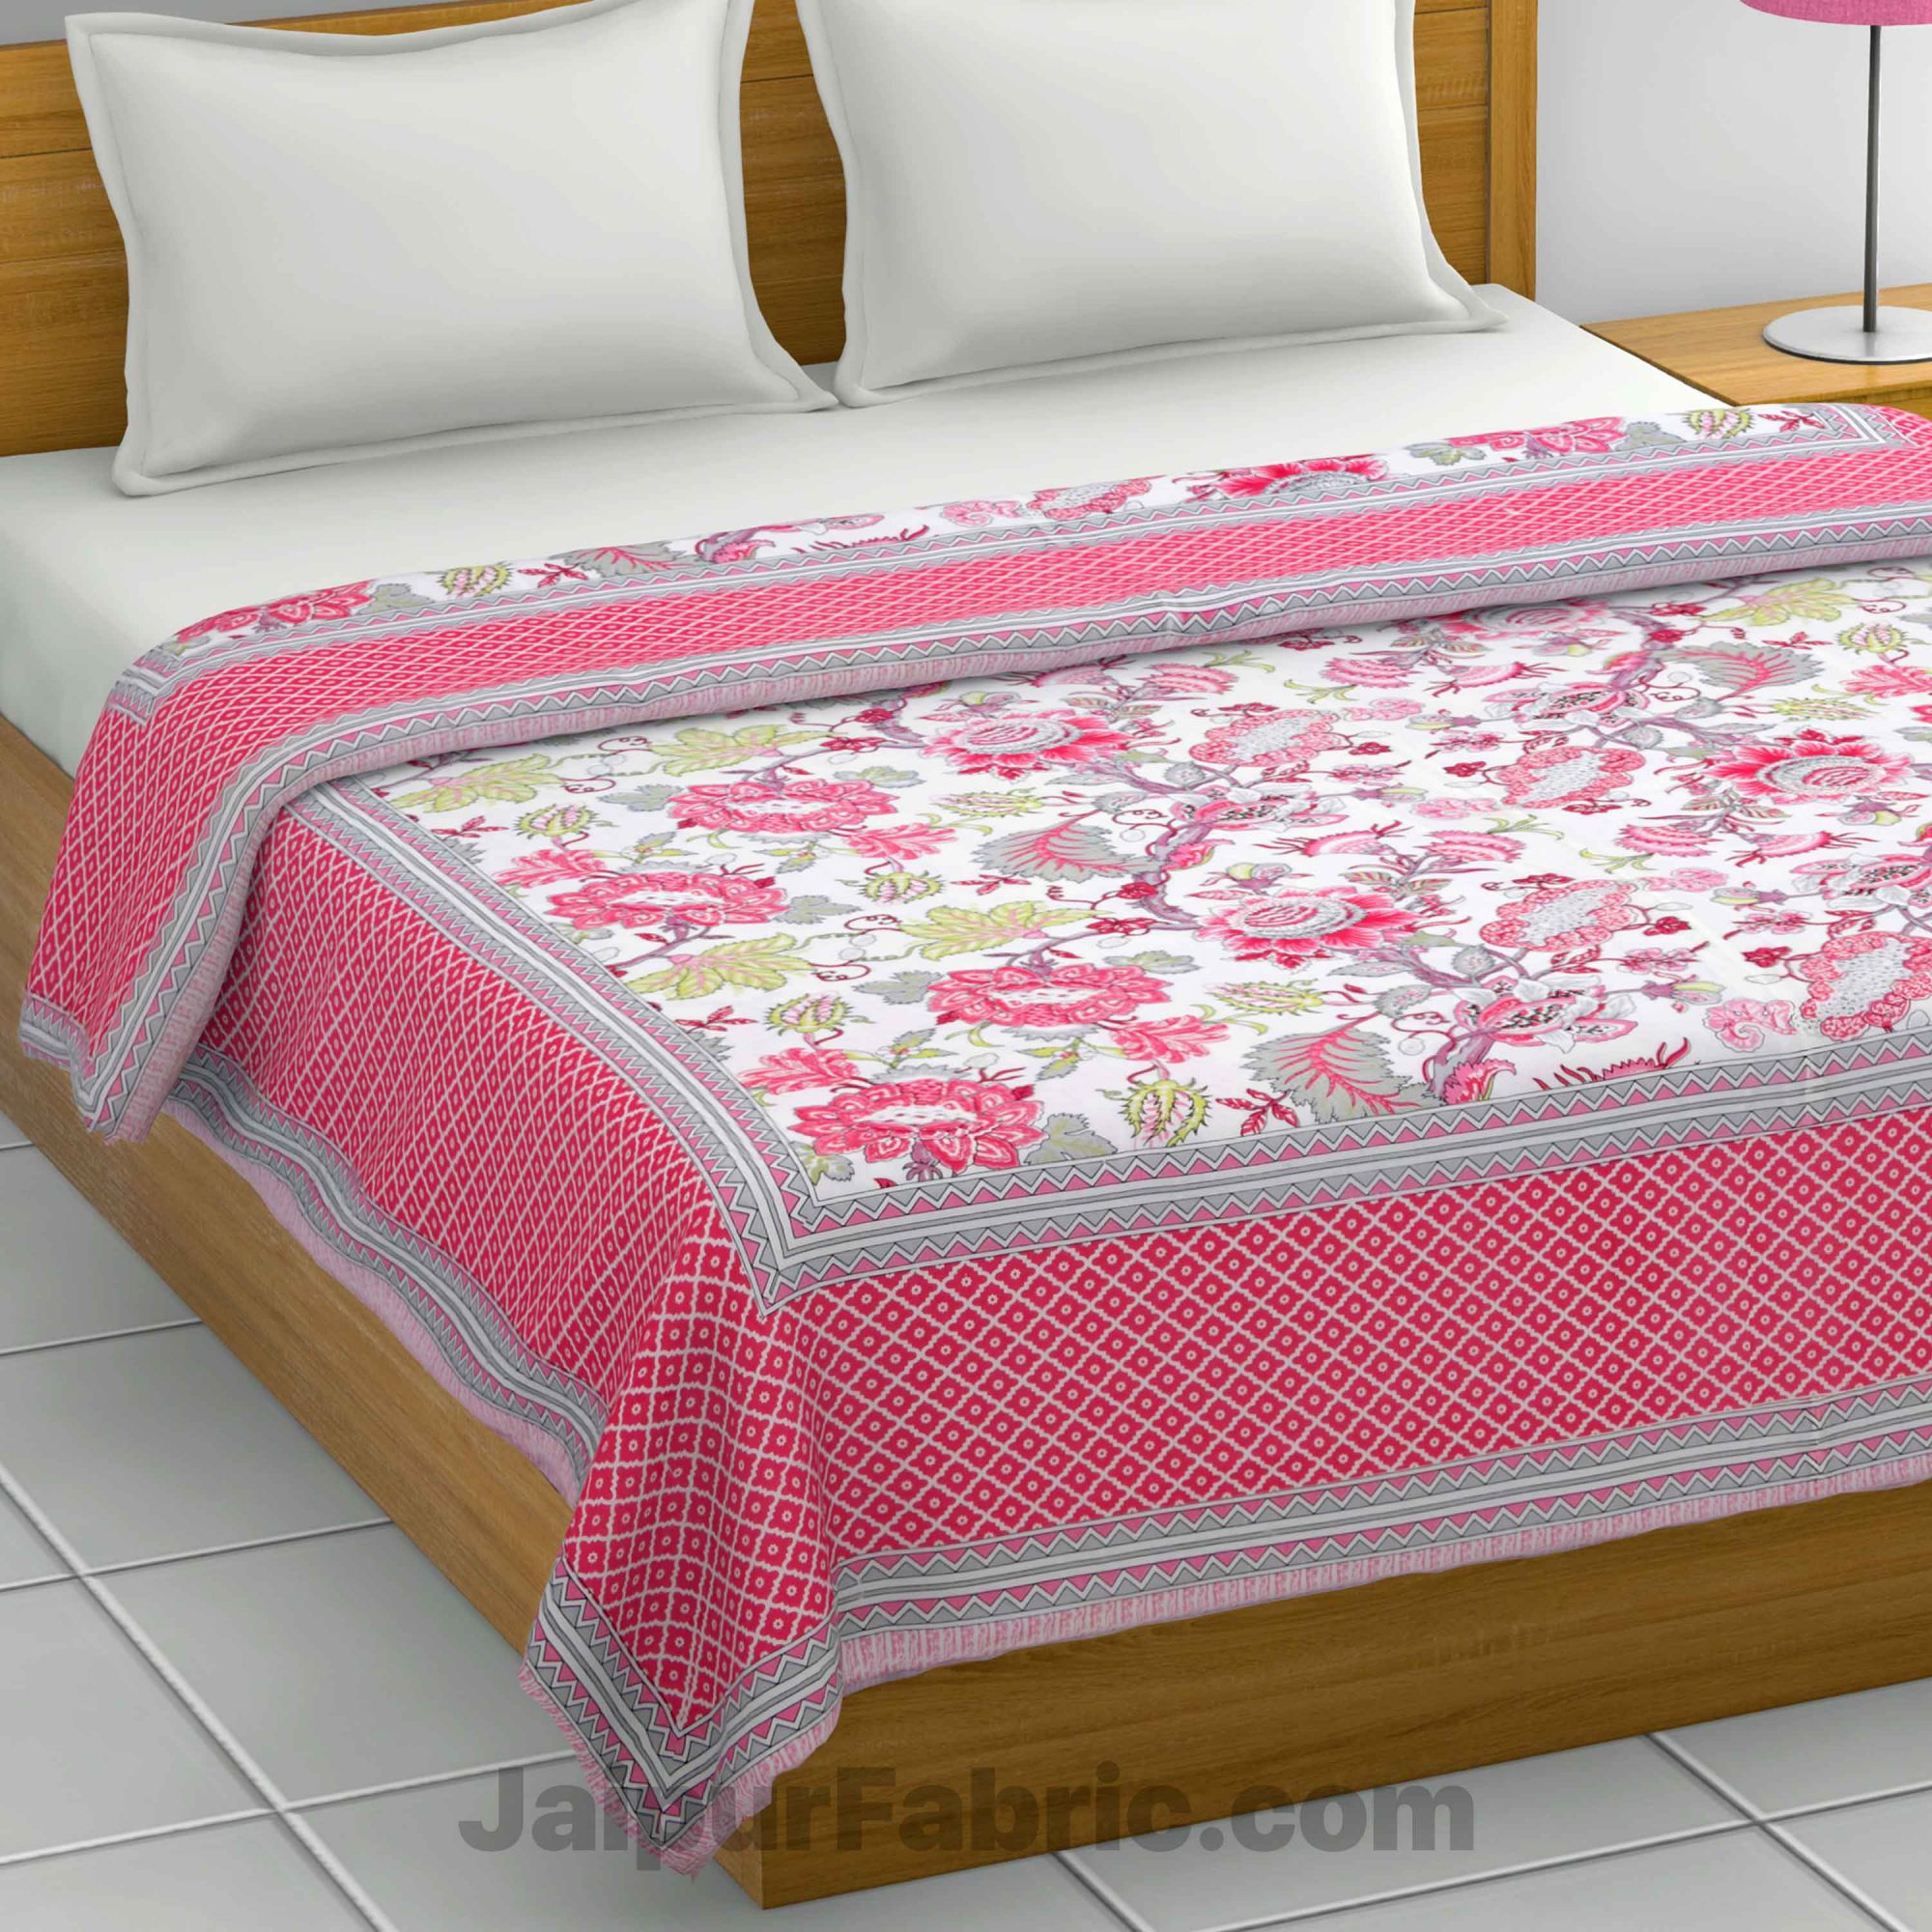 Lightweight Reversible Double Bed Dohar Pink Gala FlowersSkin Friendly Pure Cotton MulMul Blanket / AC Comforter / Summer Quilt